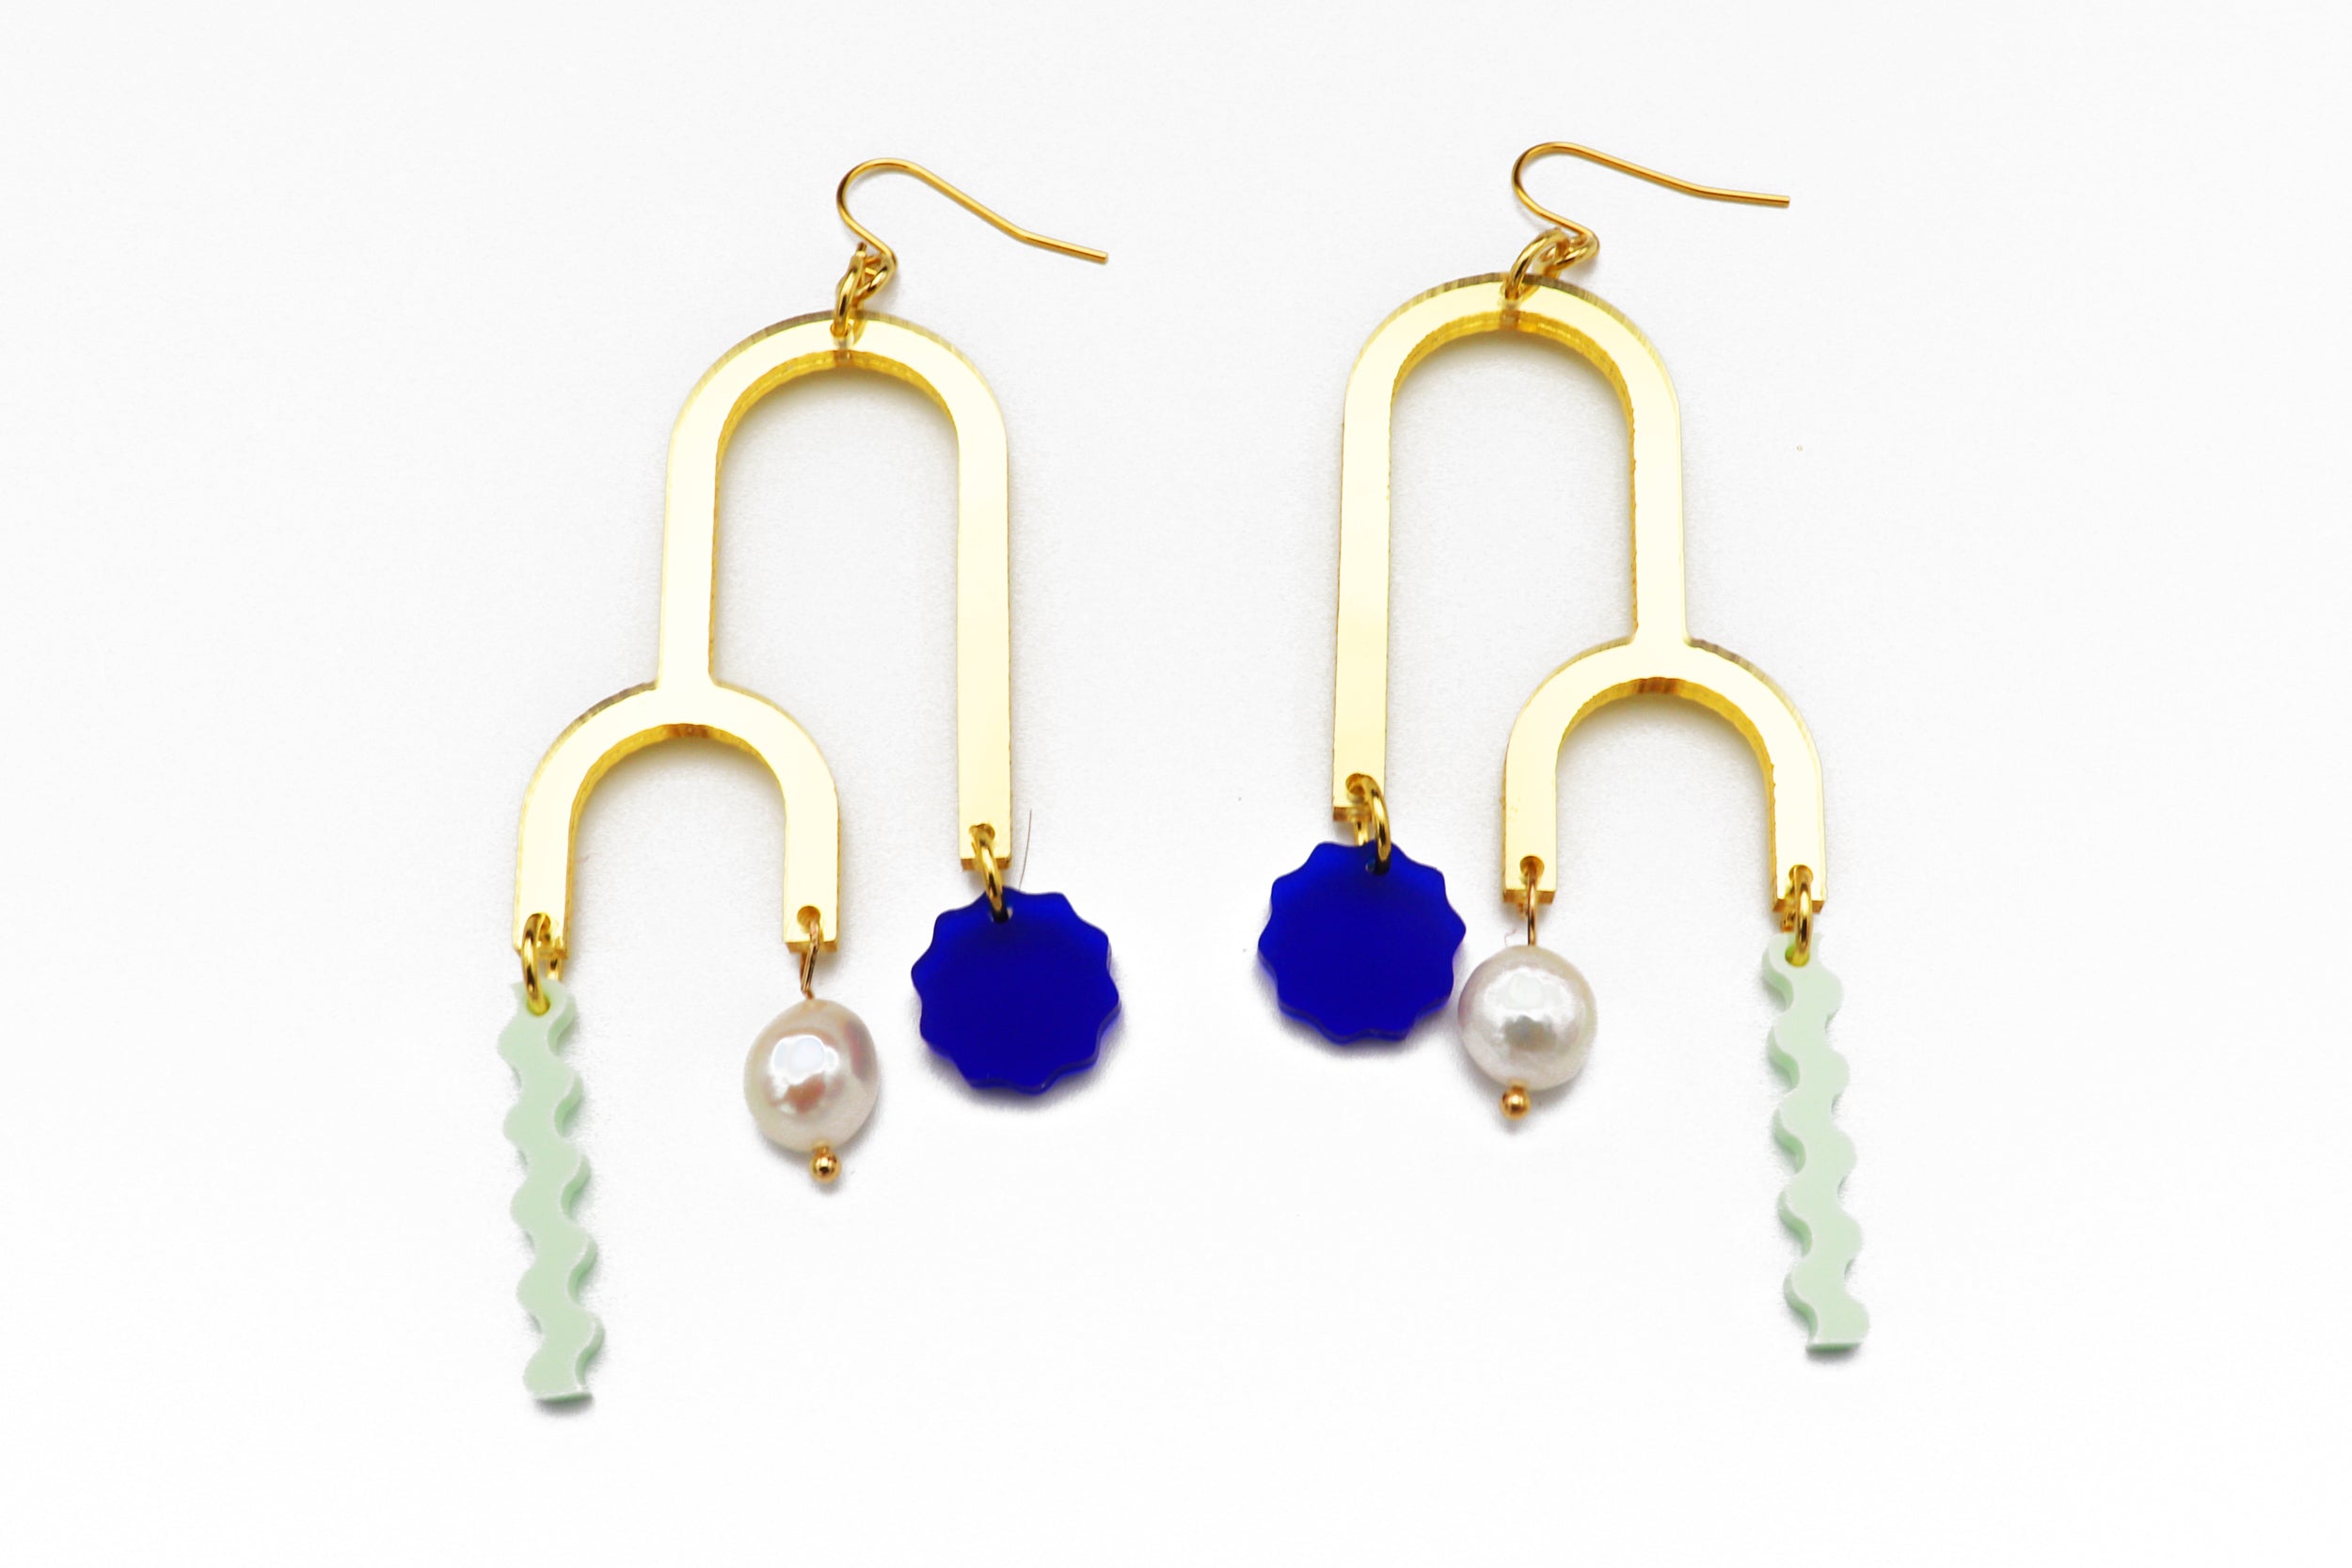 Double Arch Earrings - Gold